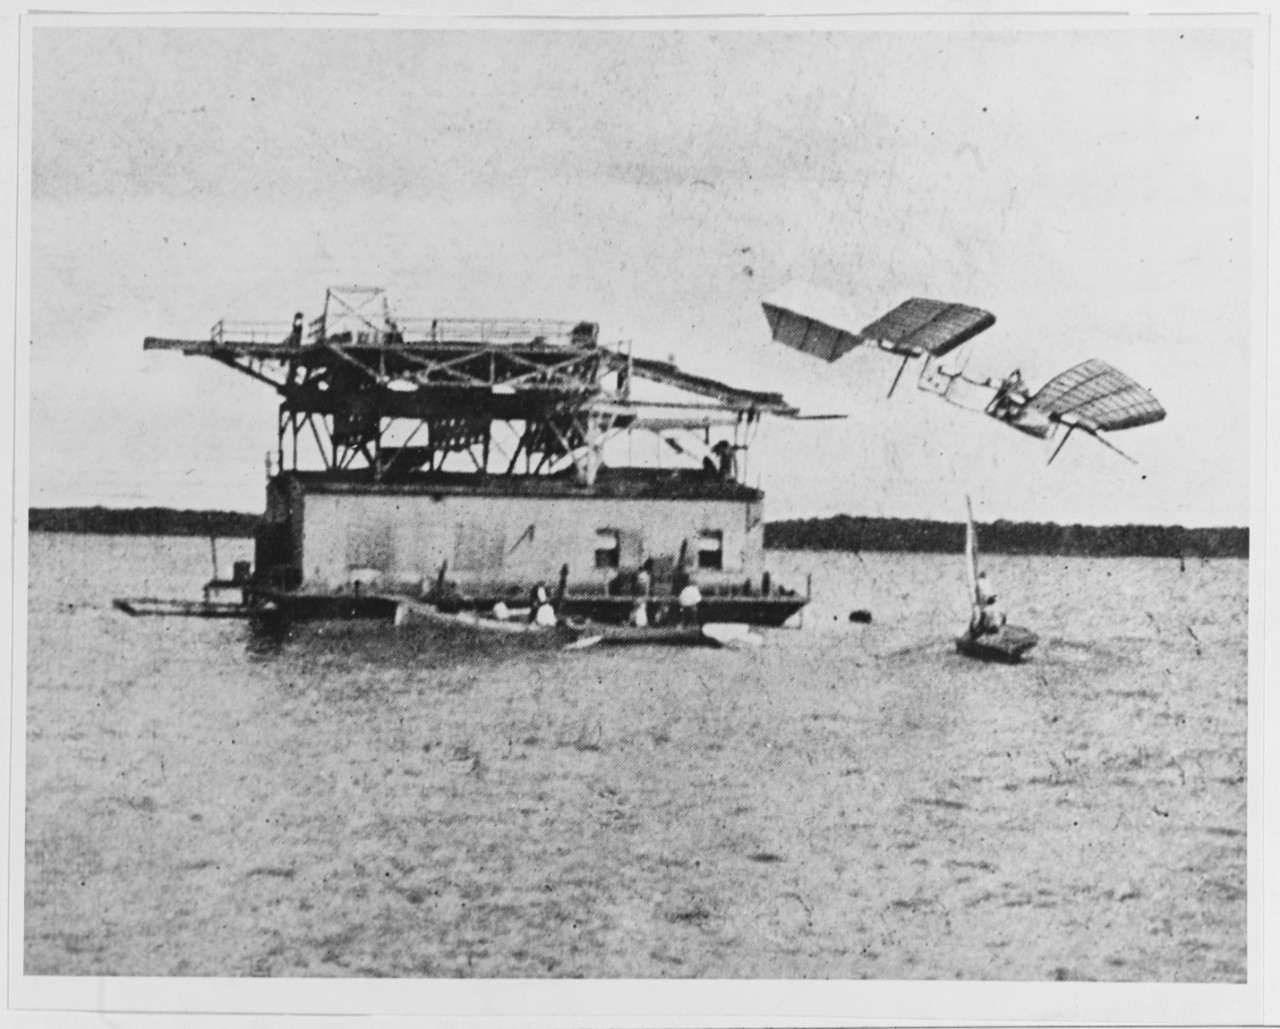 Professor Langley's Aerodrome Flight, October 7, 1903. 